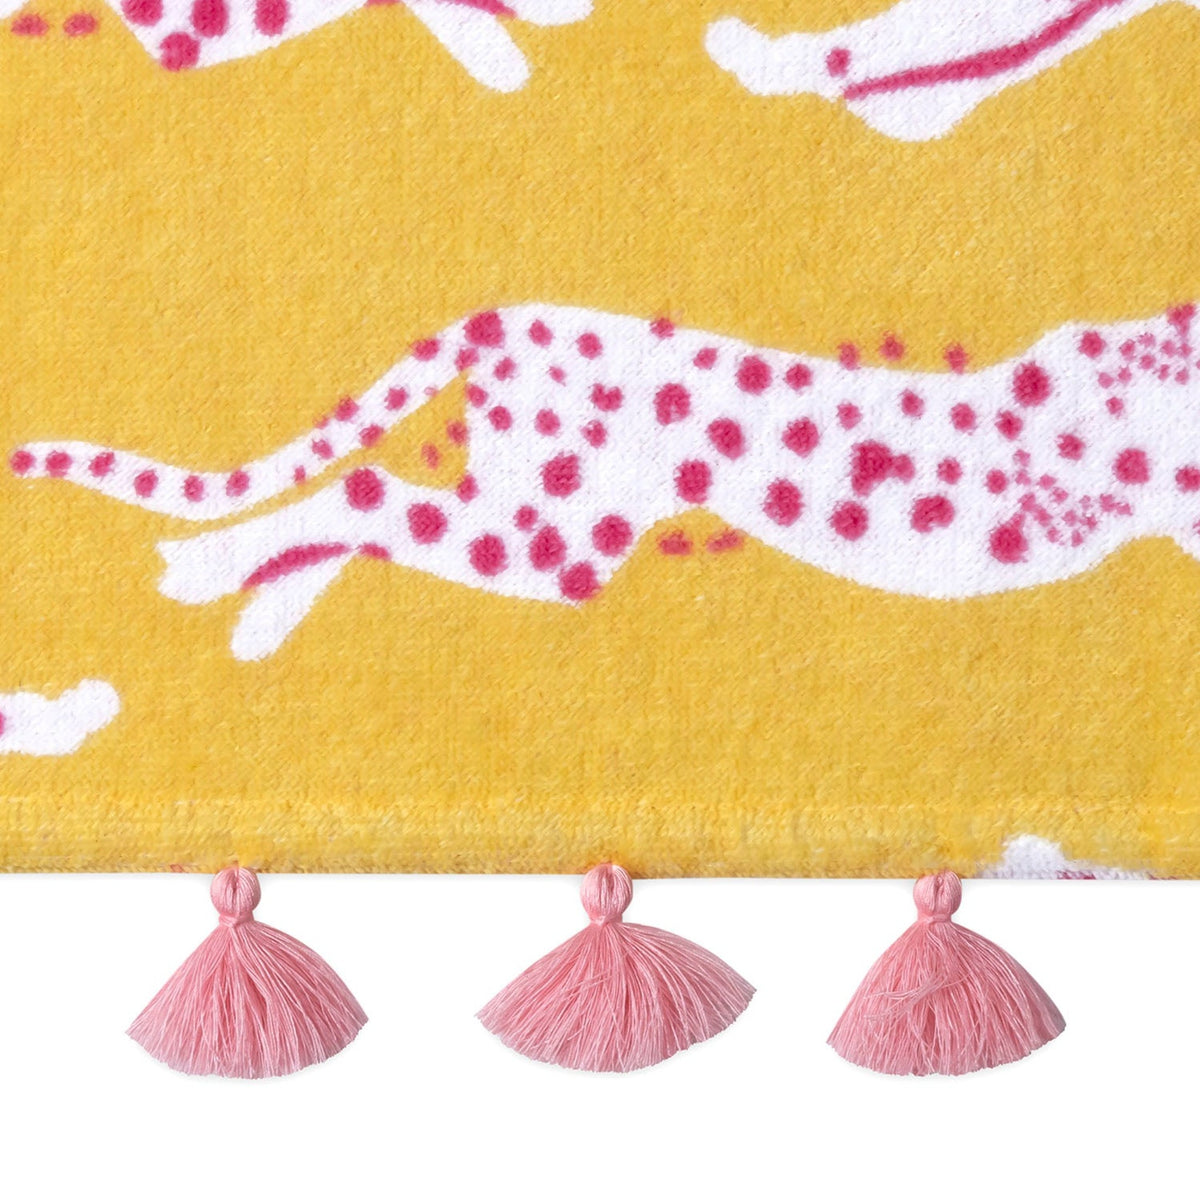 Swatch Sample of Matouk Leaping Leopard Beach Towels in Color Lemonade